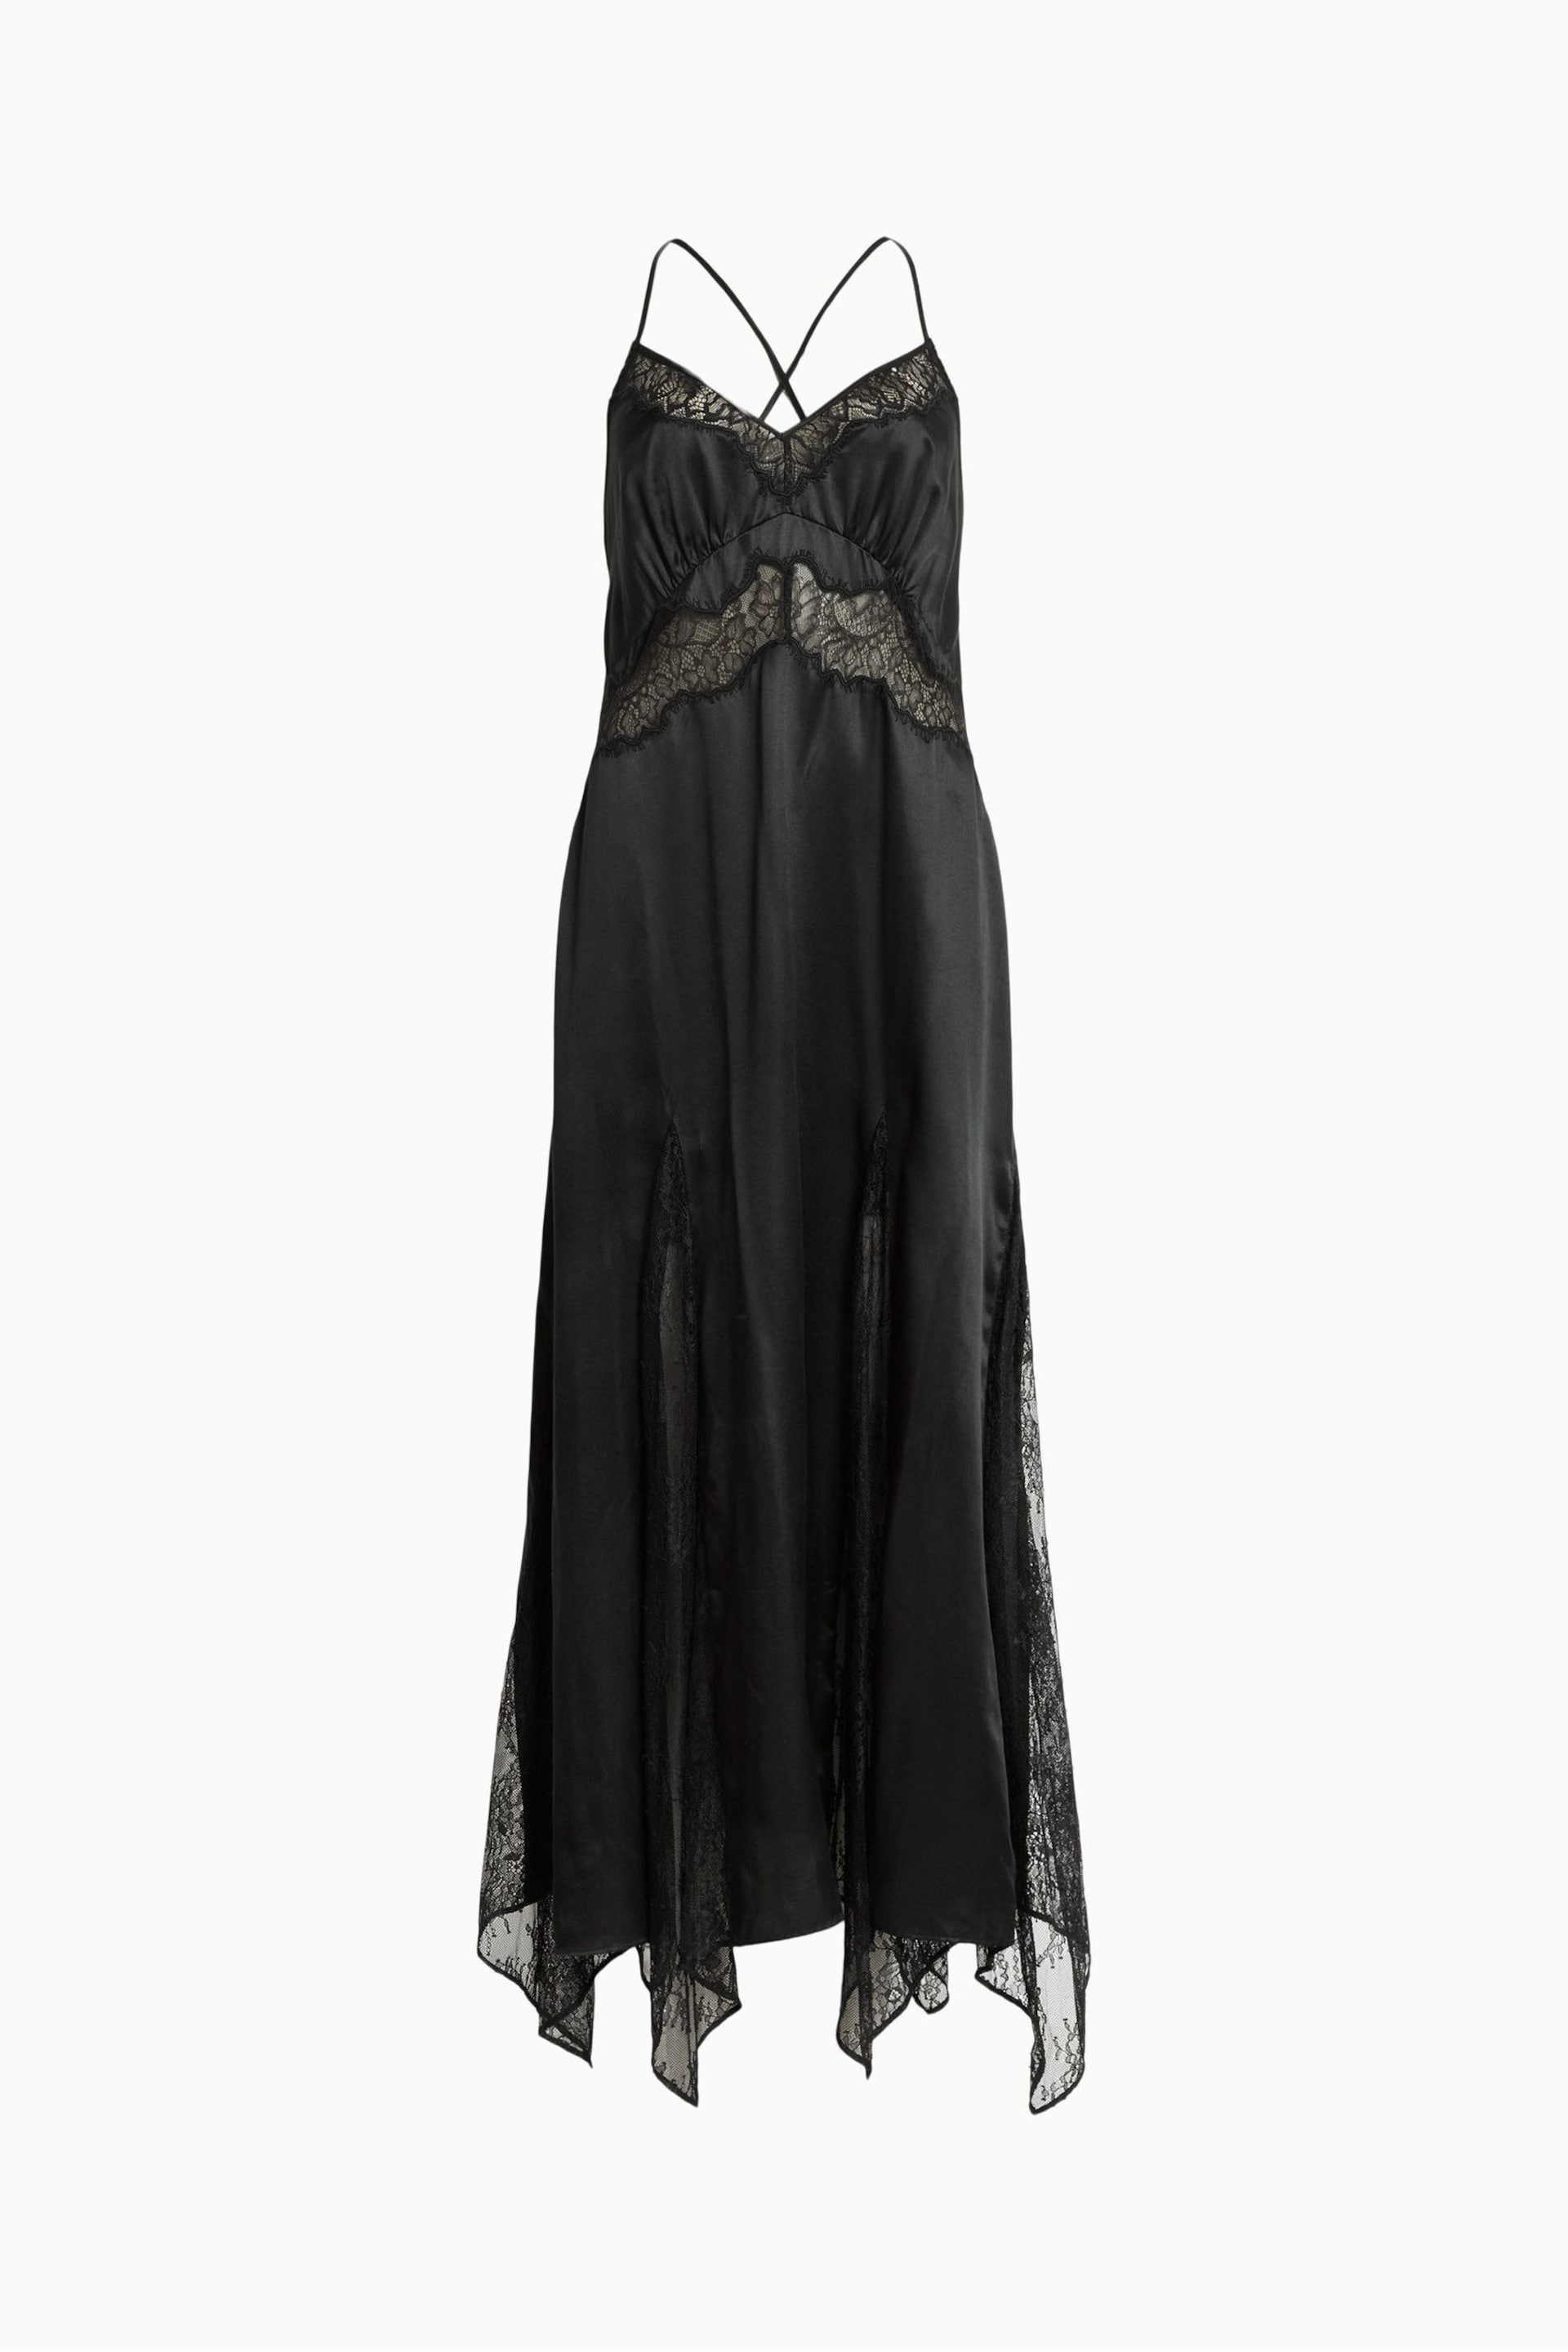 AllSaints Black Jasmine Dress - Image 7 of 7